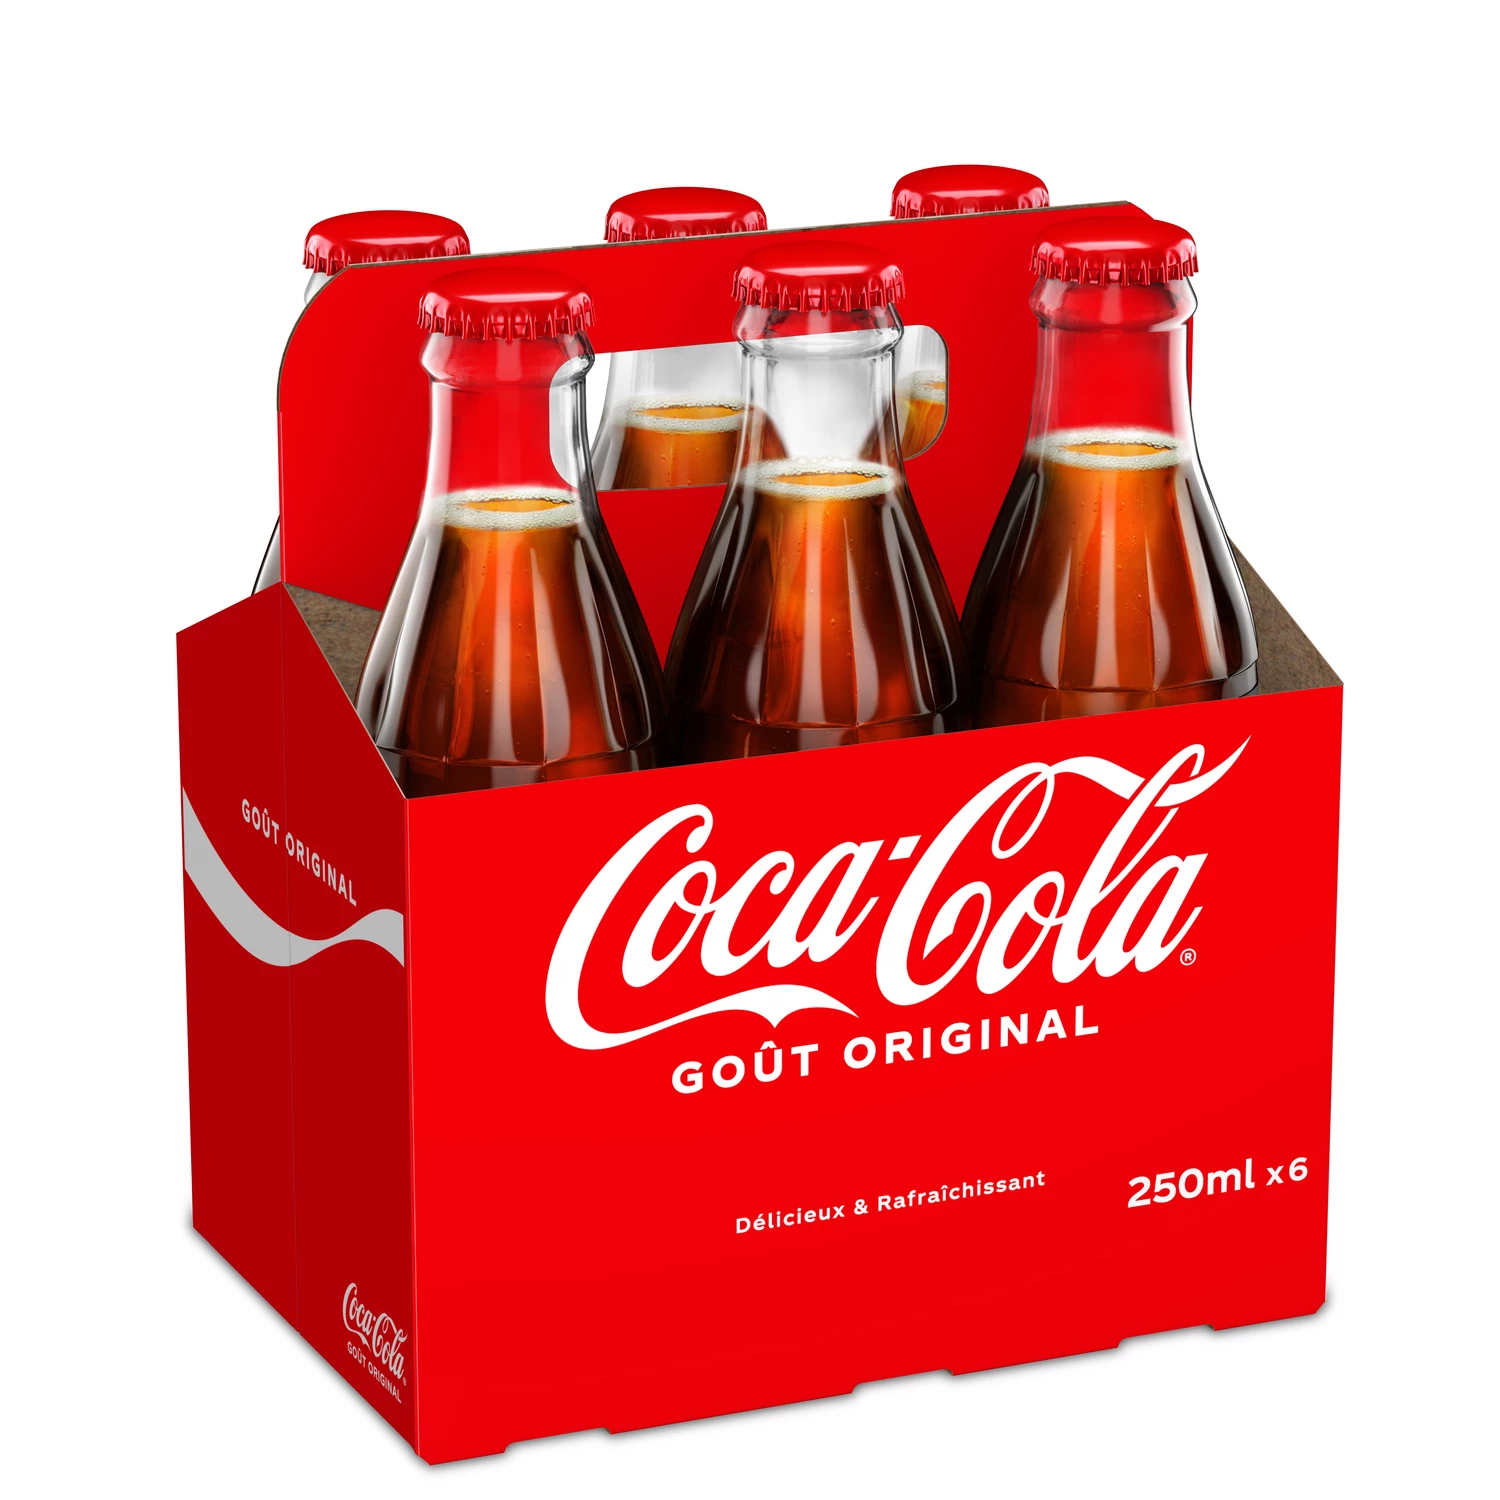 Coca-cola Cesta Ivp 6x25cl